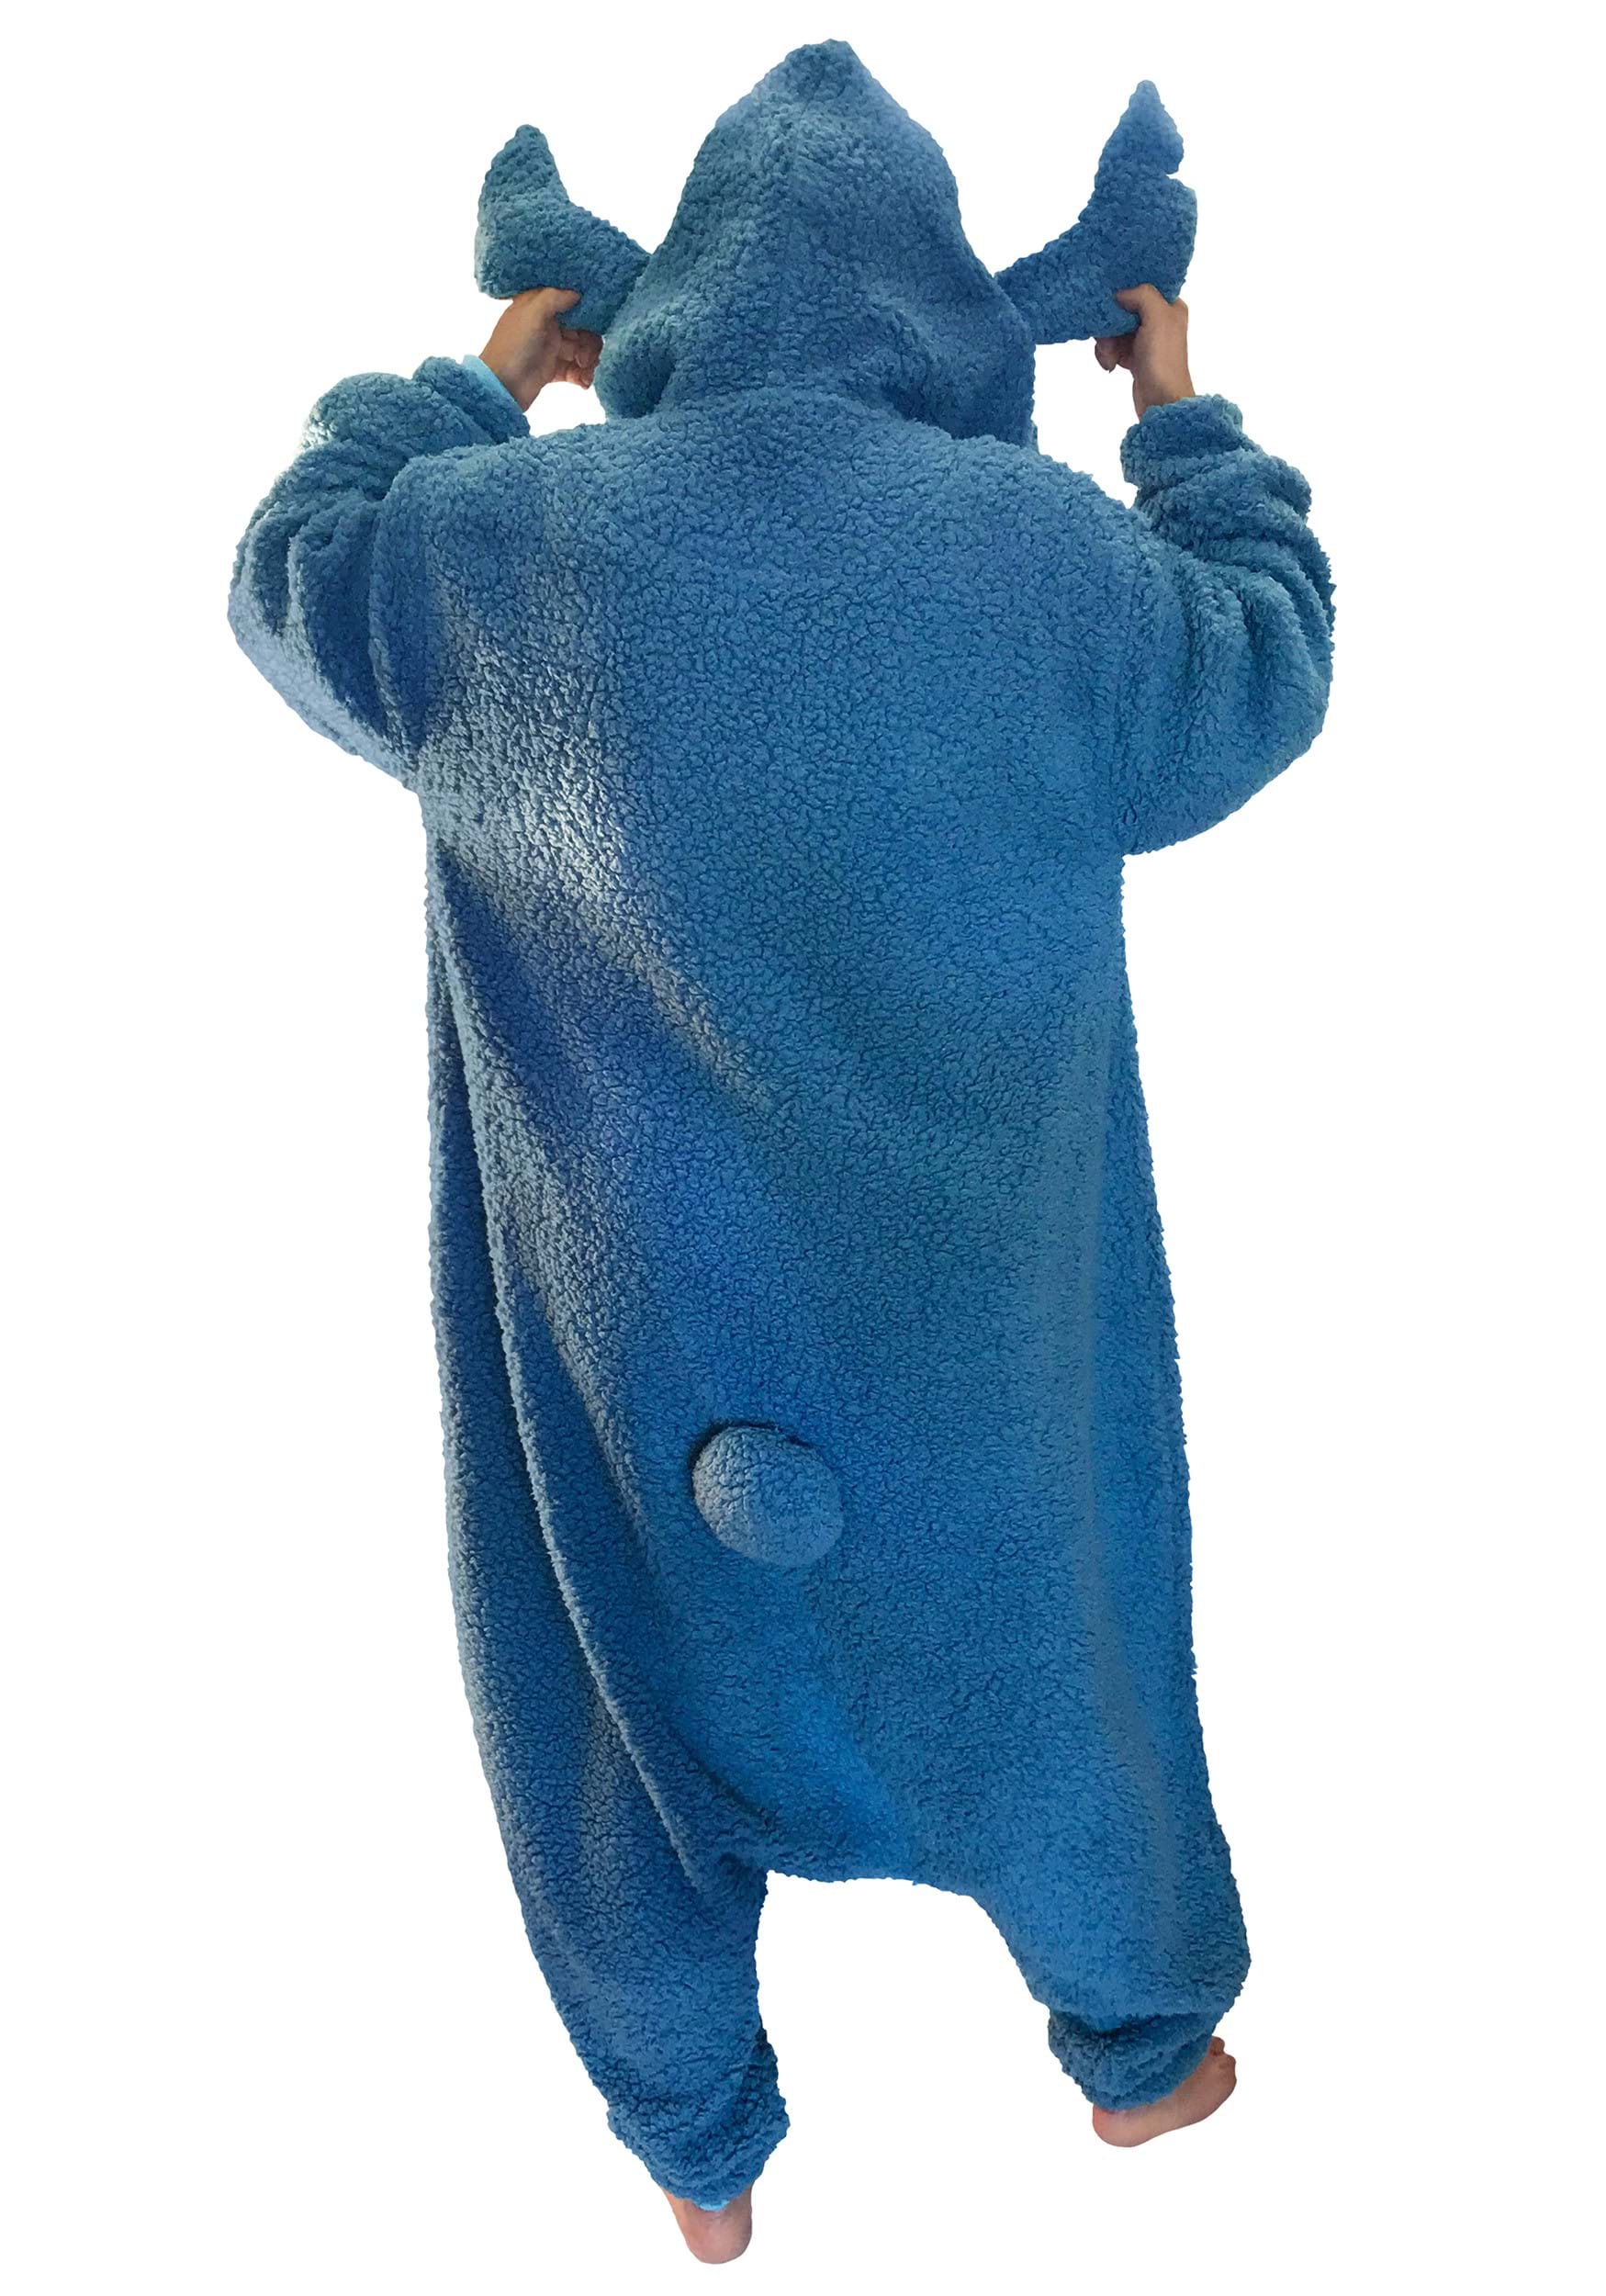 Women's Union Suit Disney Costume Onesie Plush Adult Pajama, Stitch, Size:  One Size 